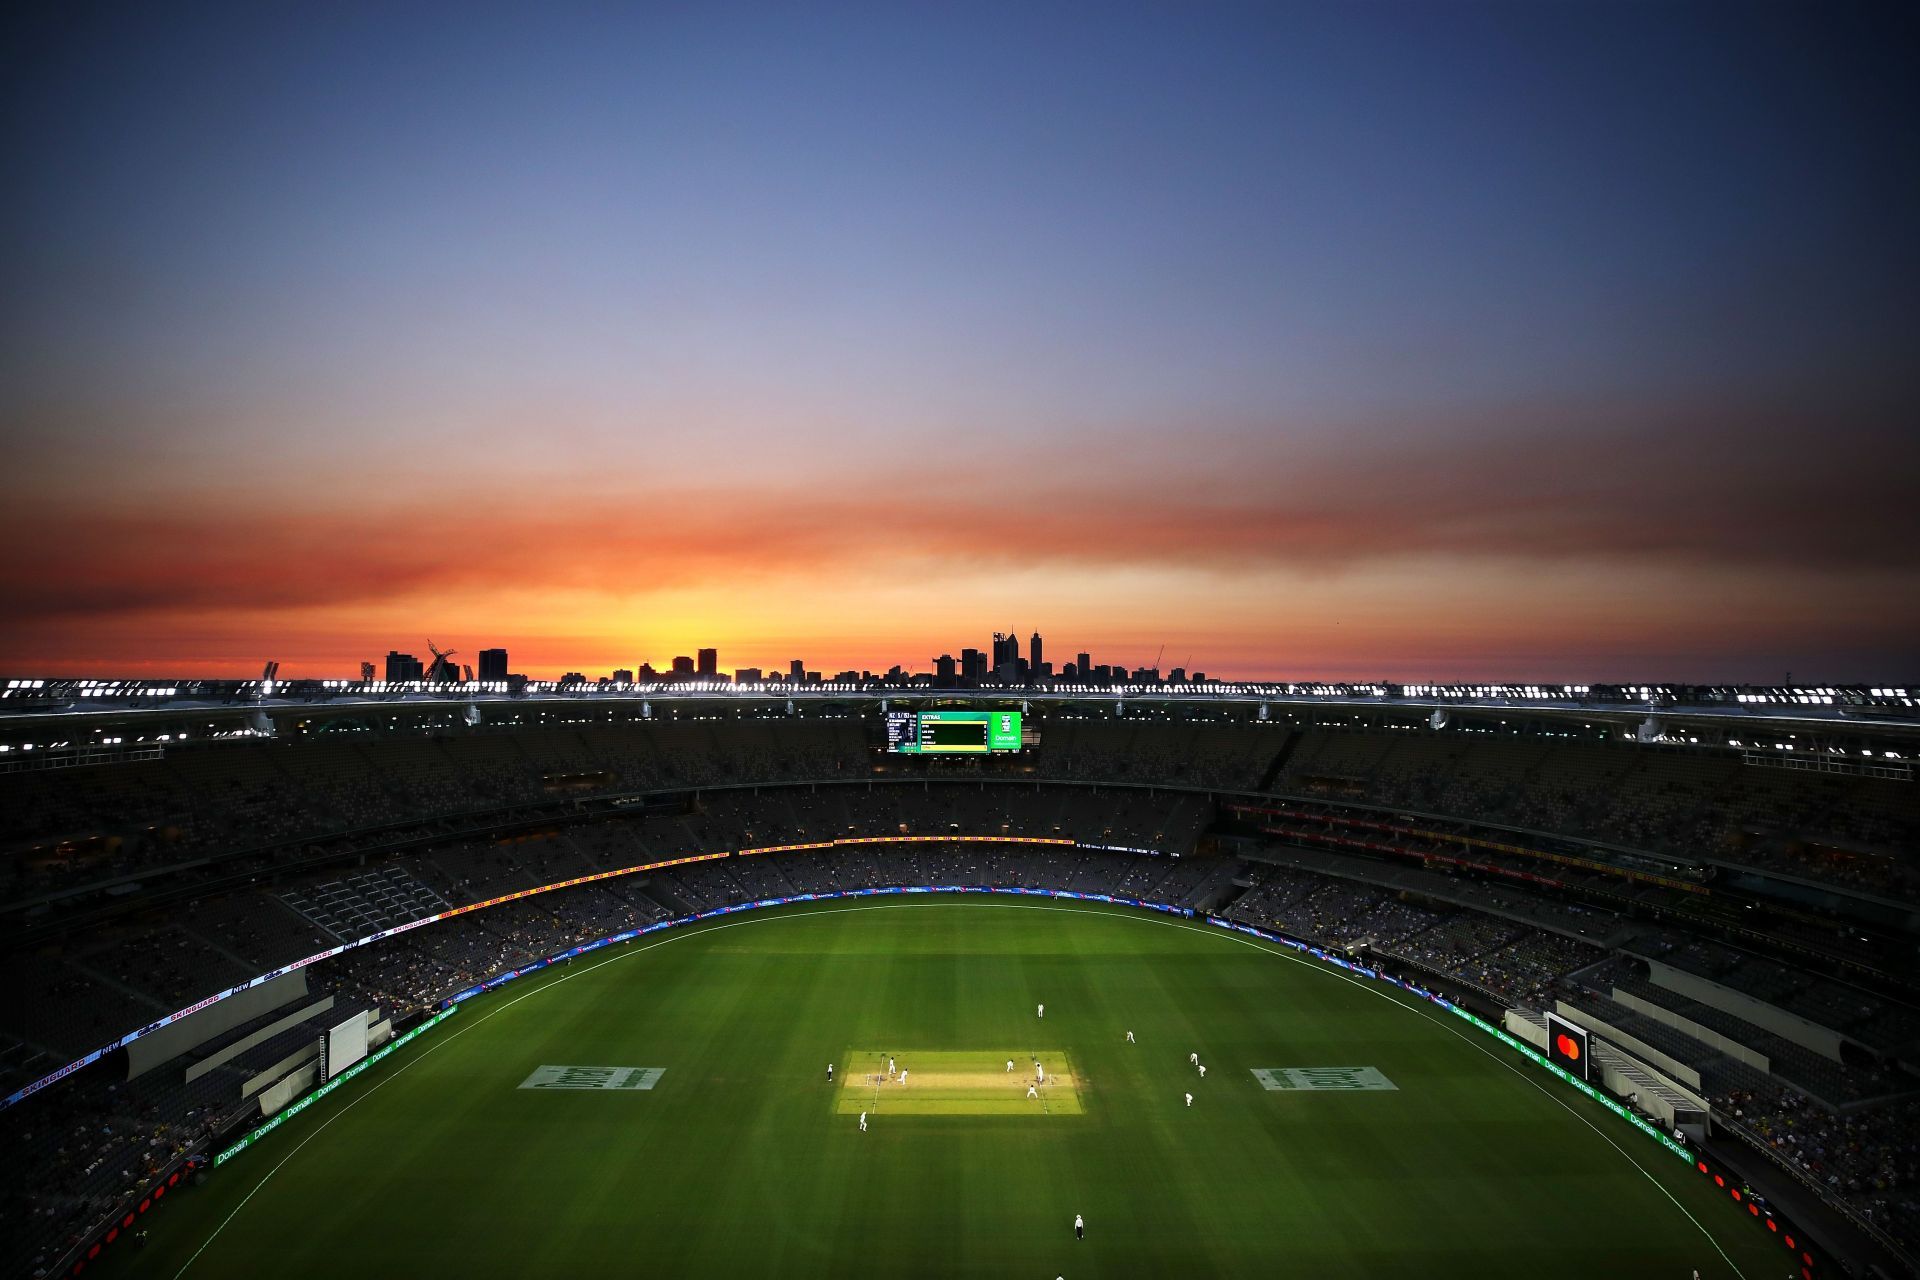 Australia v New Zealand - 1st Test: Day 4